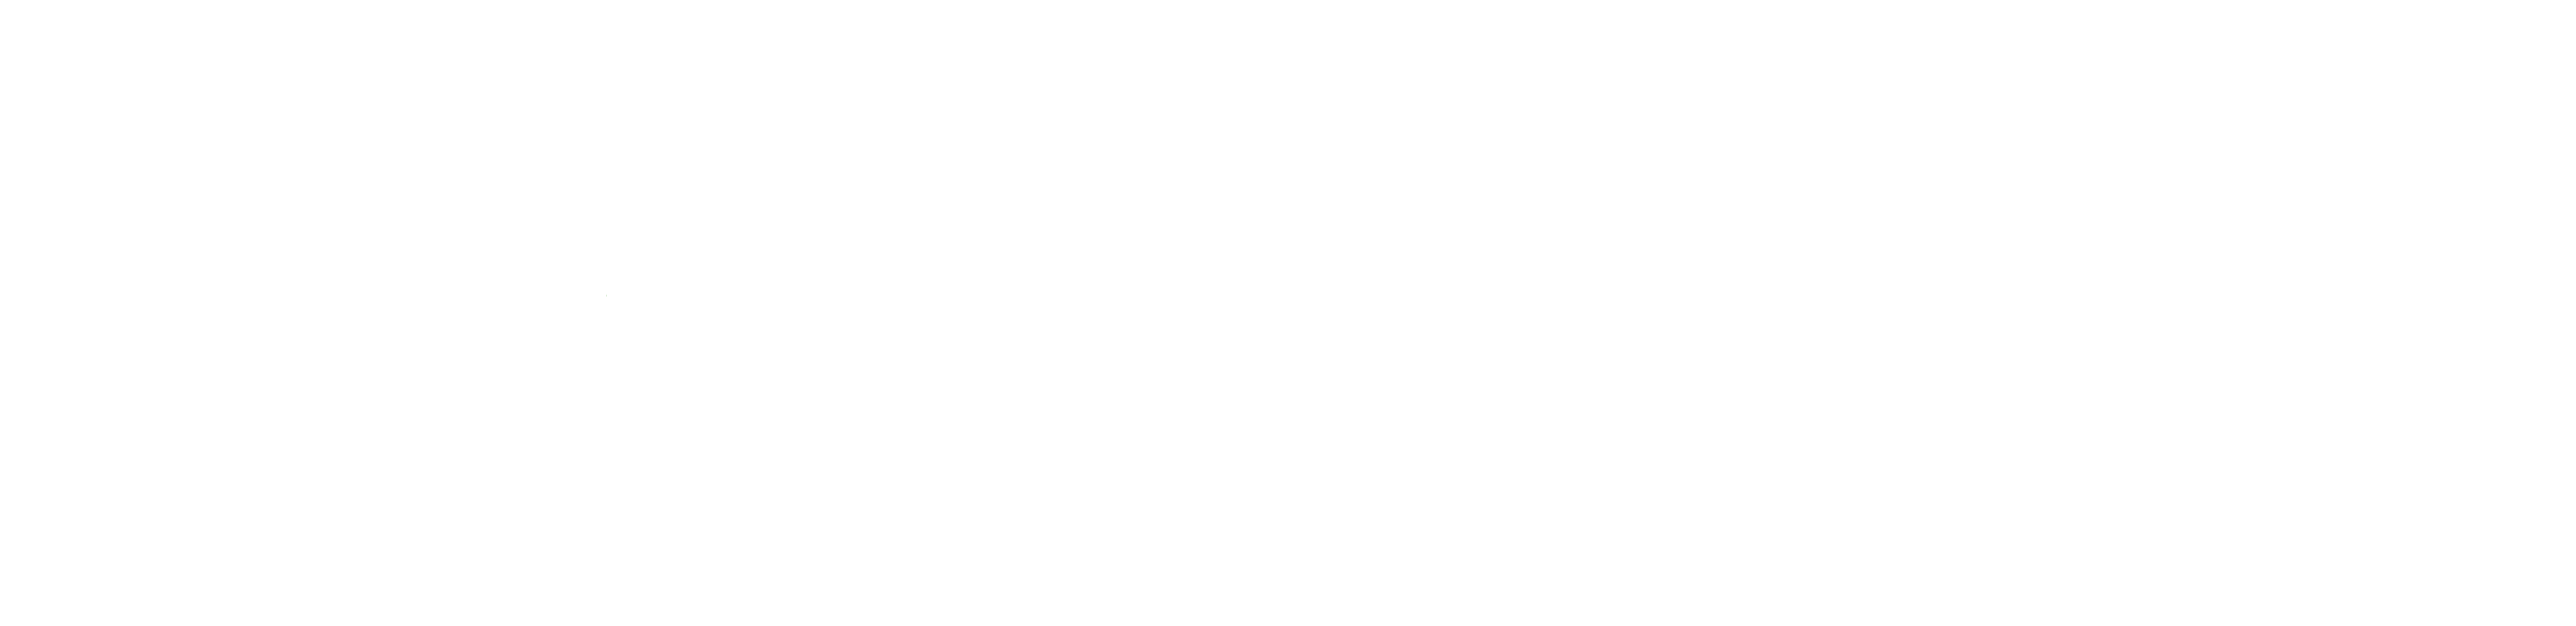 McCusker-Gill white shamrock with name logo